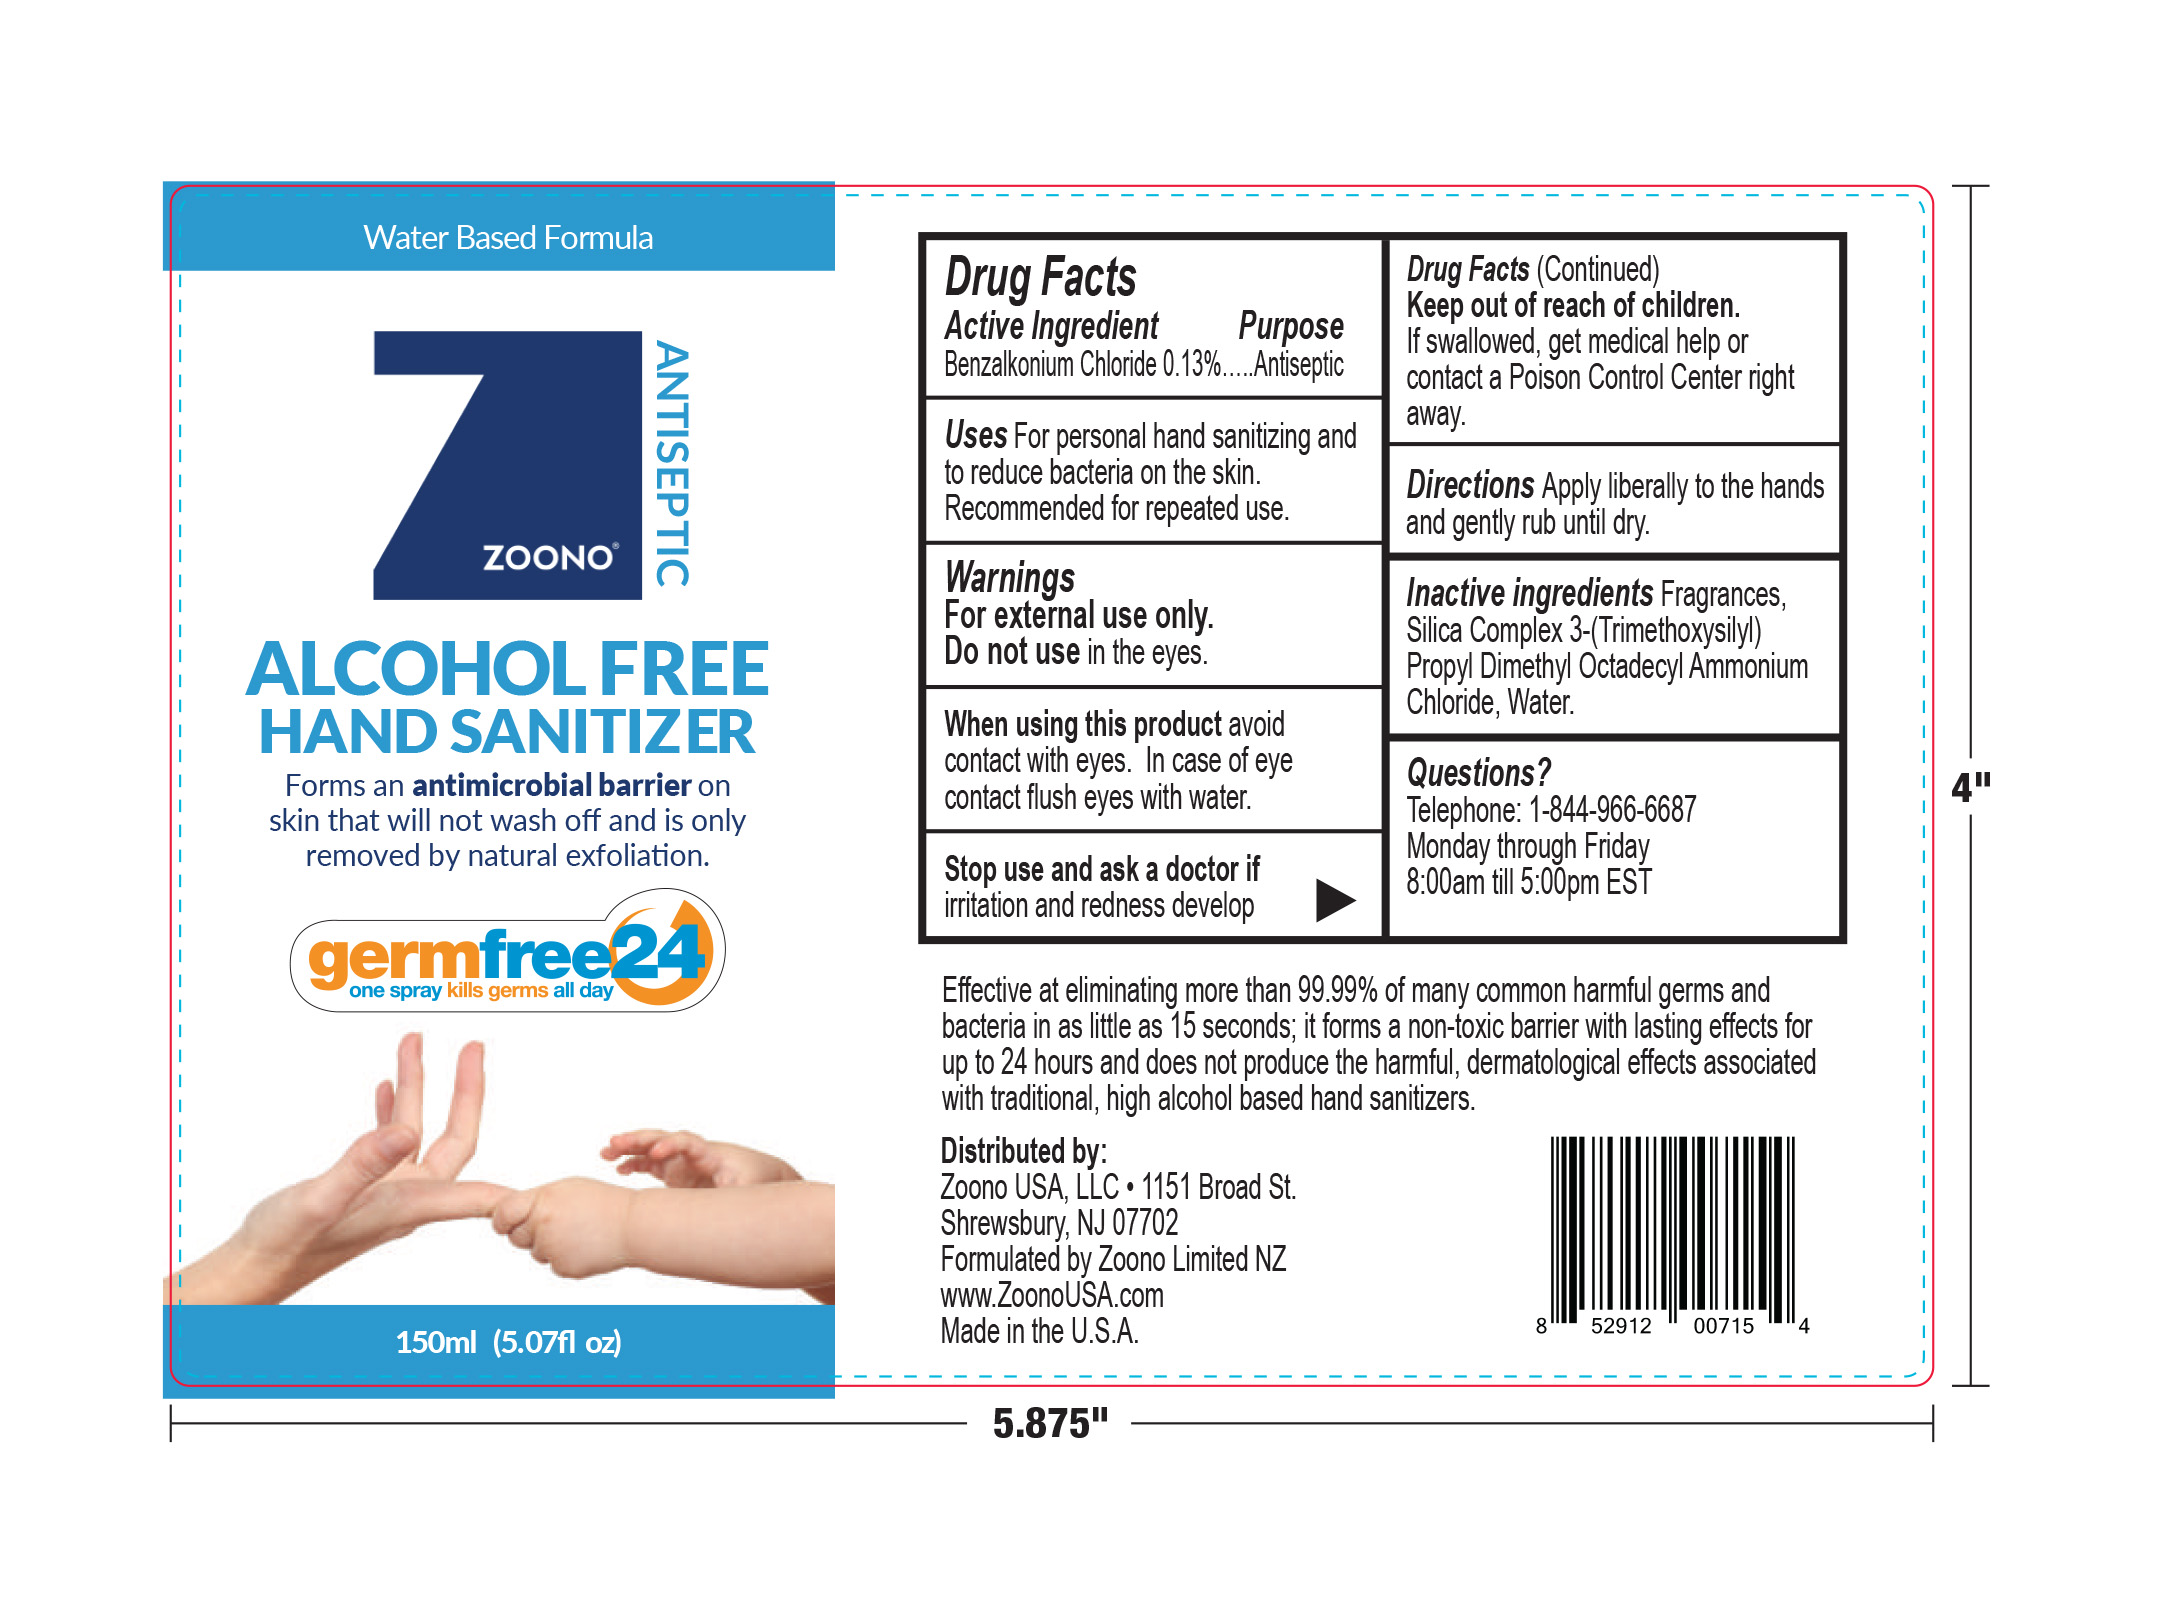 Zoono Alcohol Free Hand Sanitizer